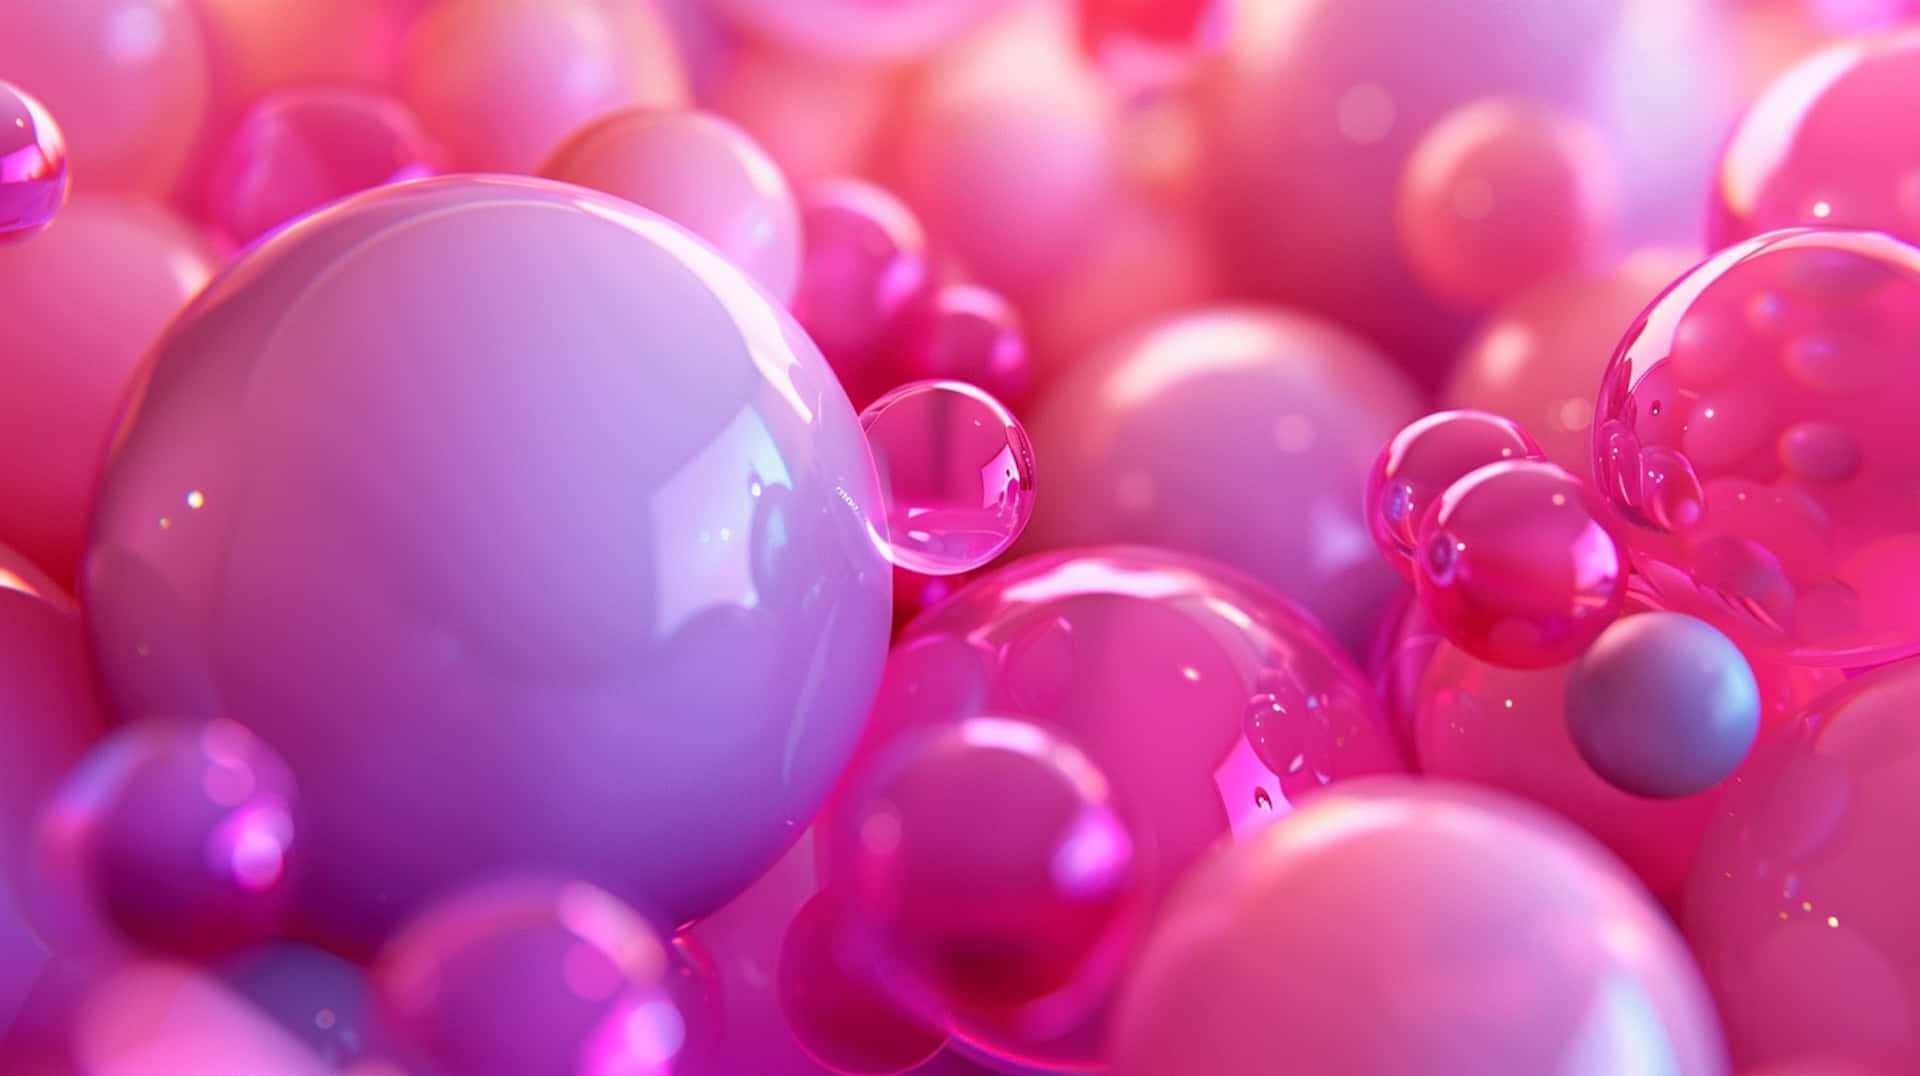 Pink Spheresand Bubbles3 D Render Wallpaper